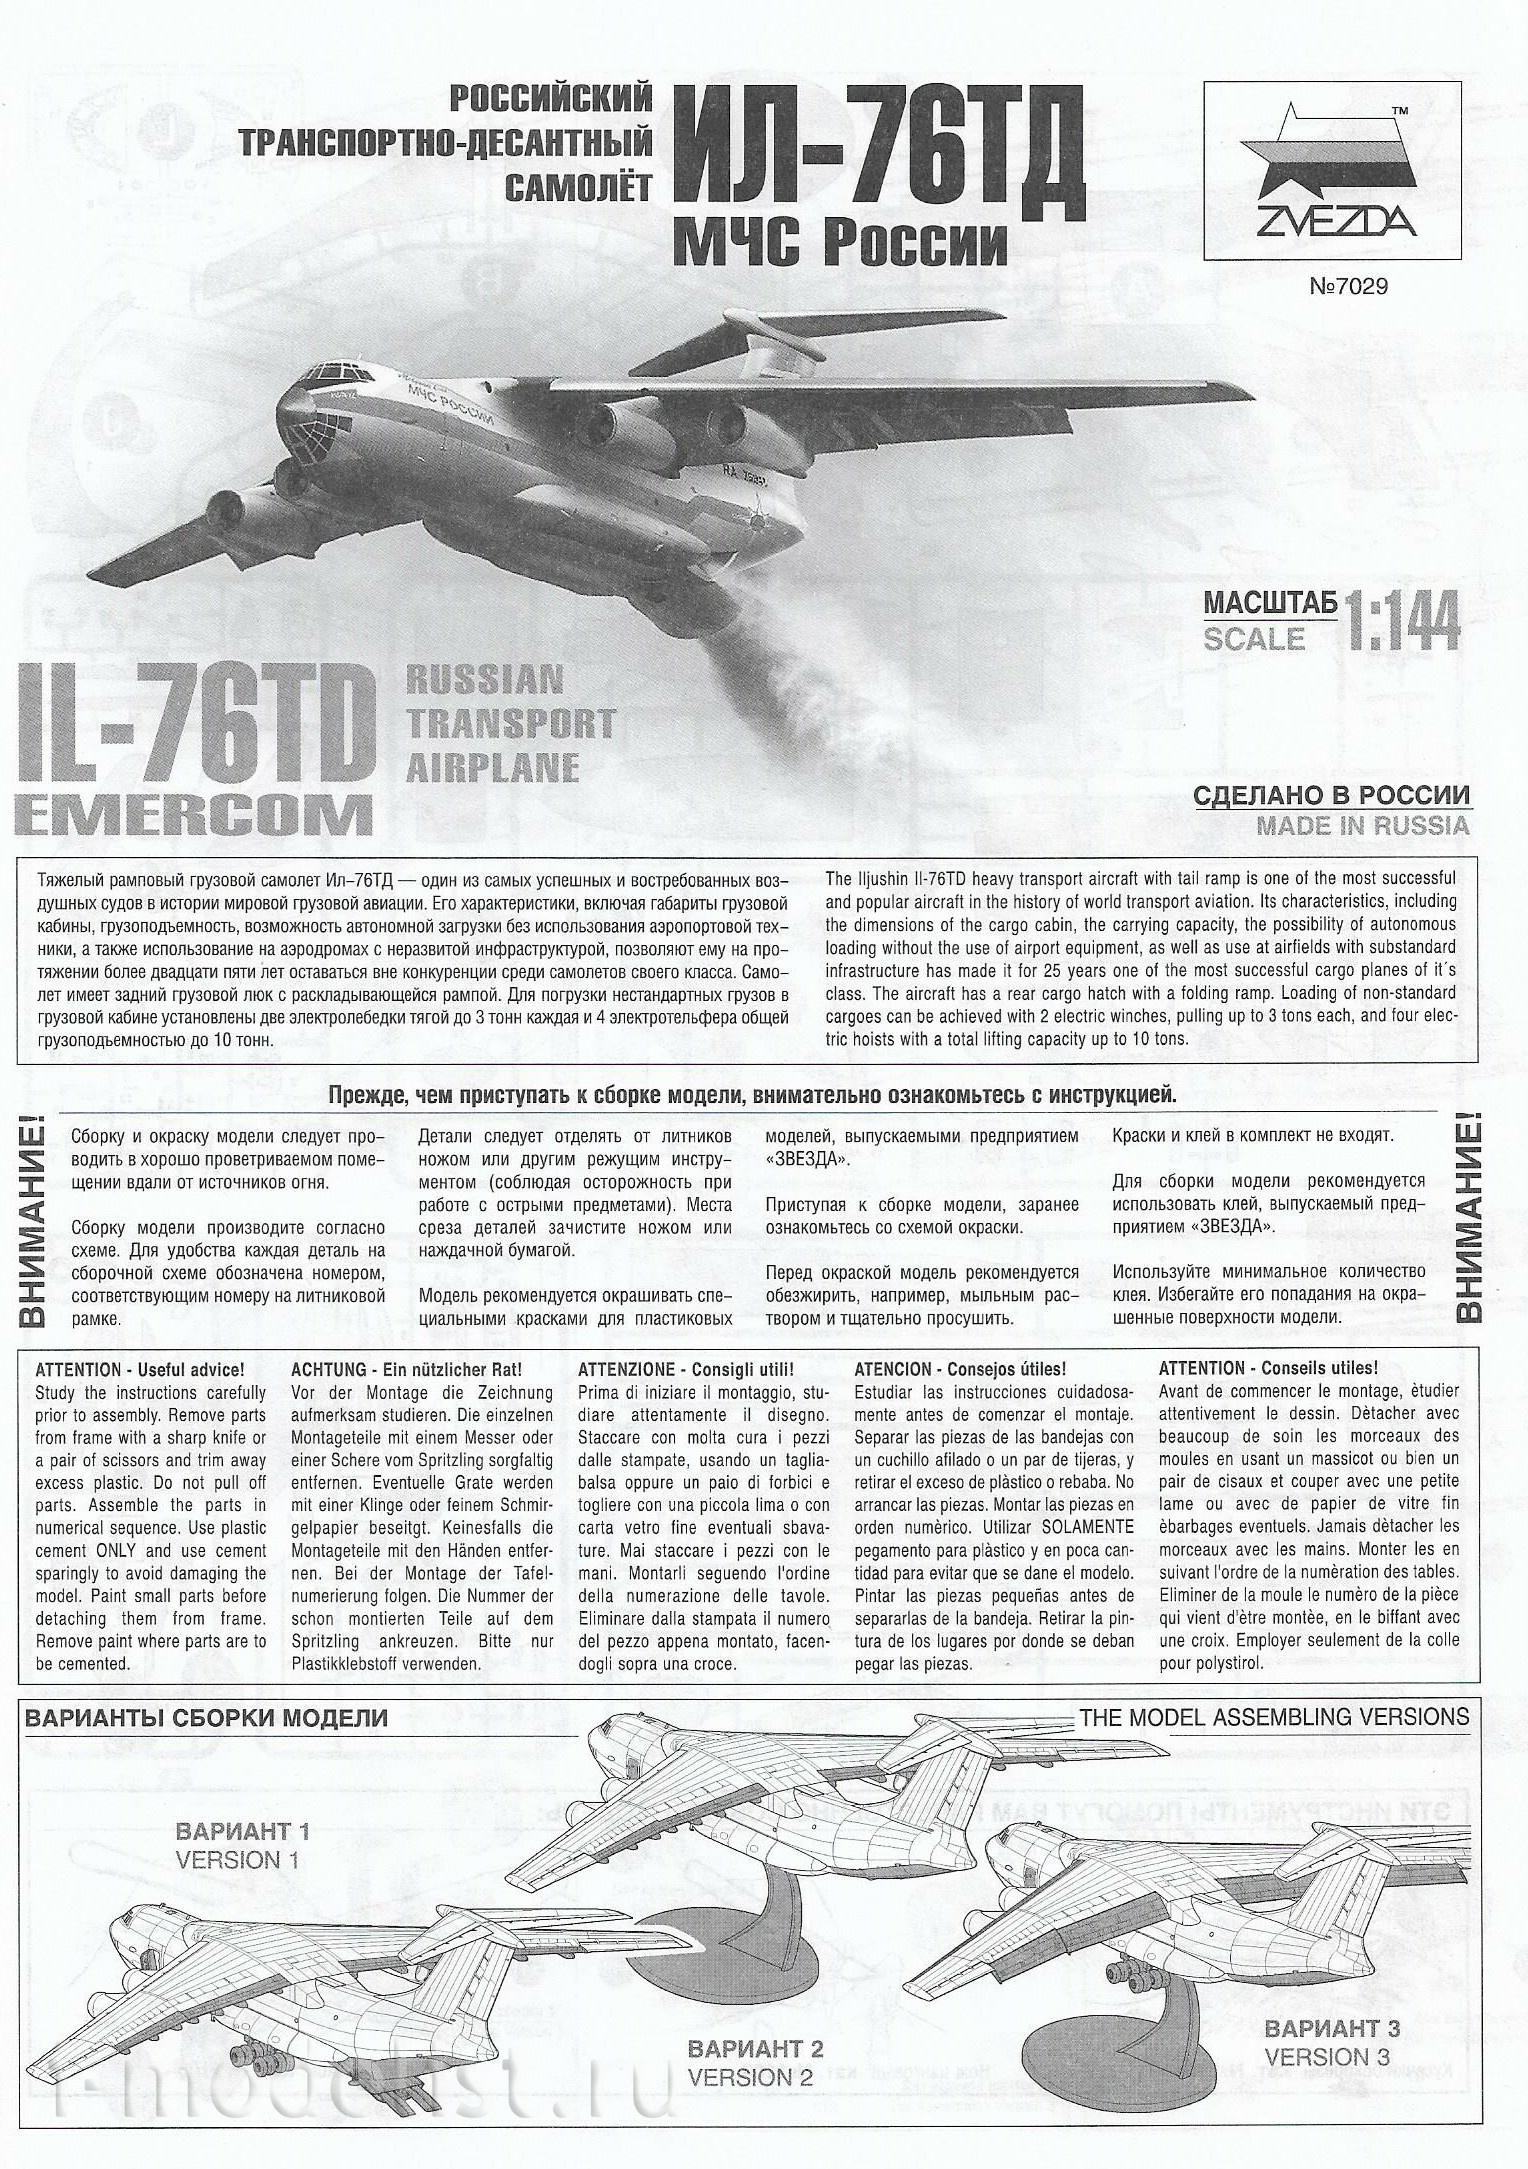 7029 Zvezda 1/144 Russian transport and landing aircraft Il-76 TD EMERCOM of Russia.